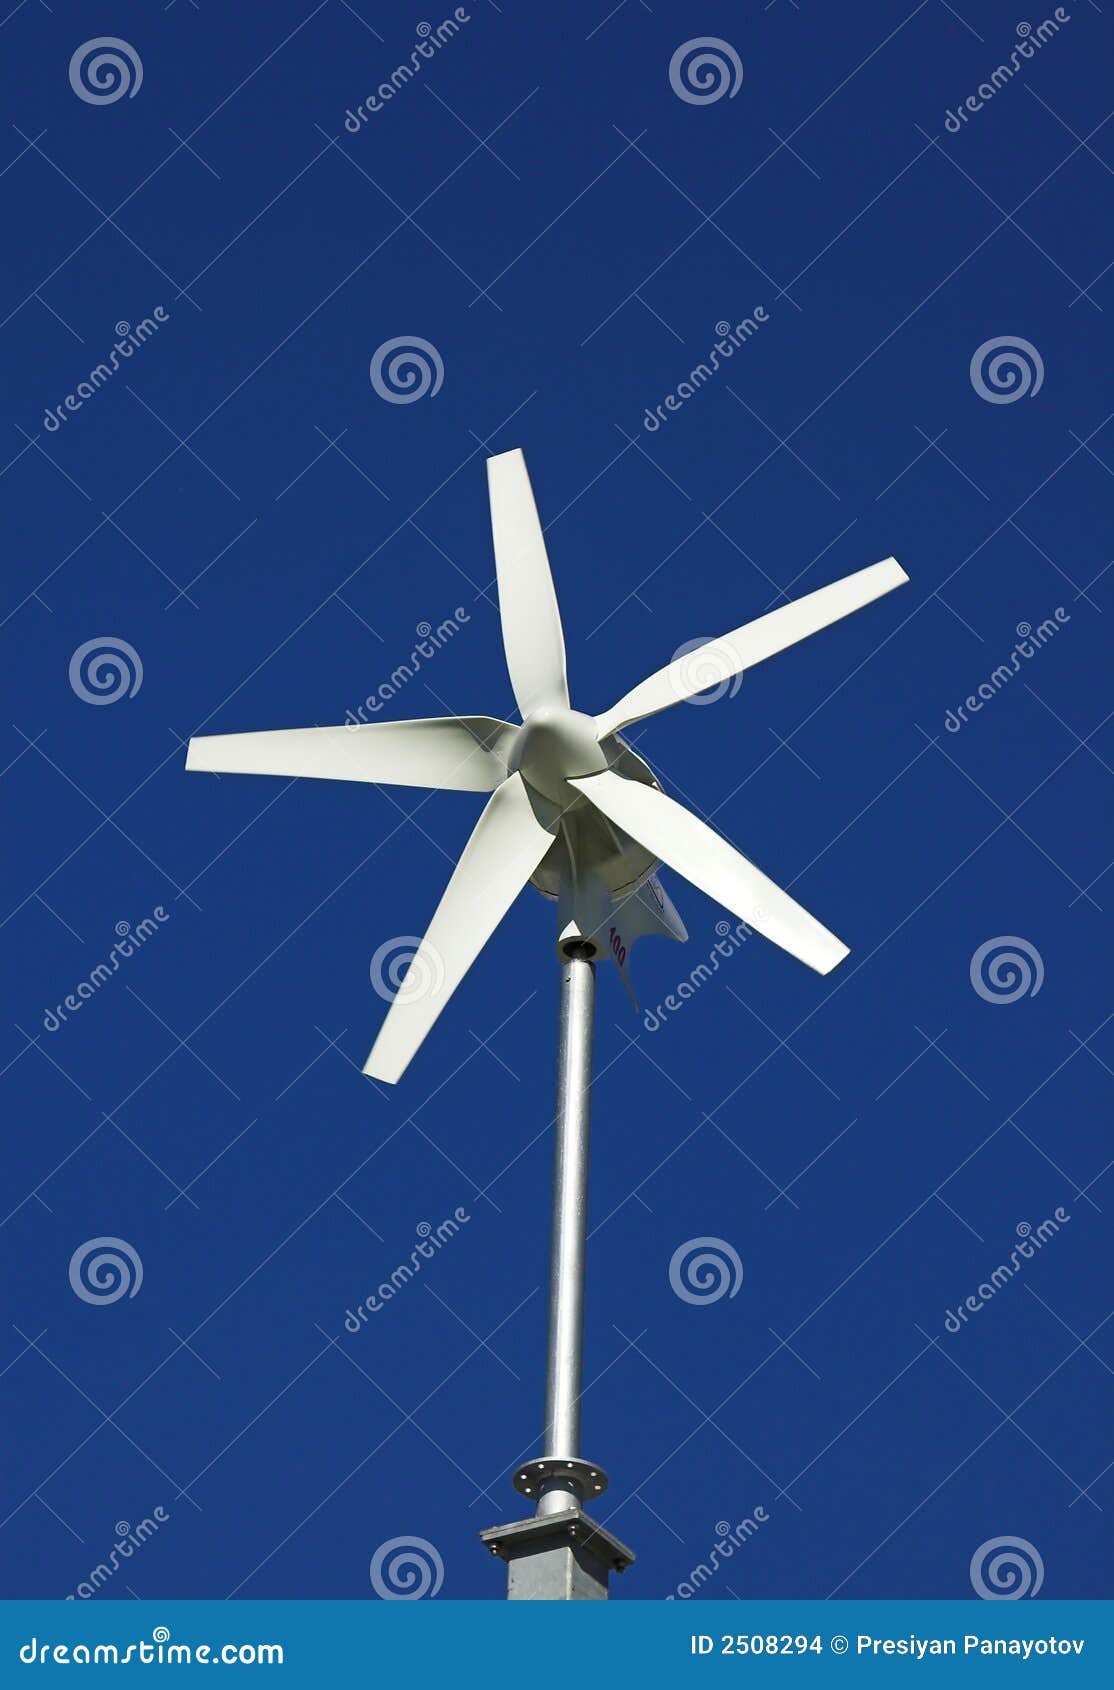 Small wind turbine generating alternative green energy.